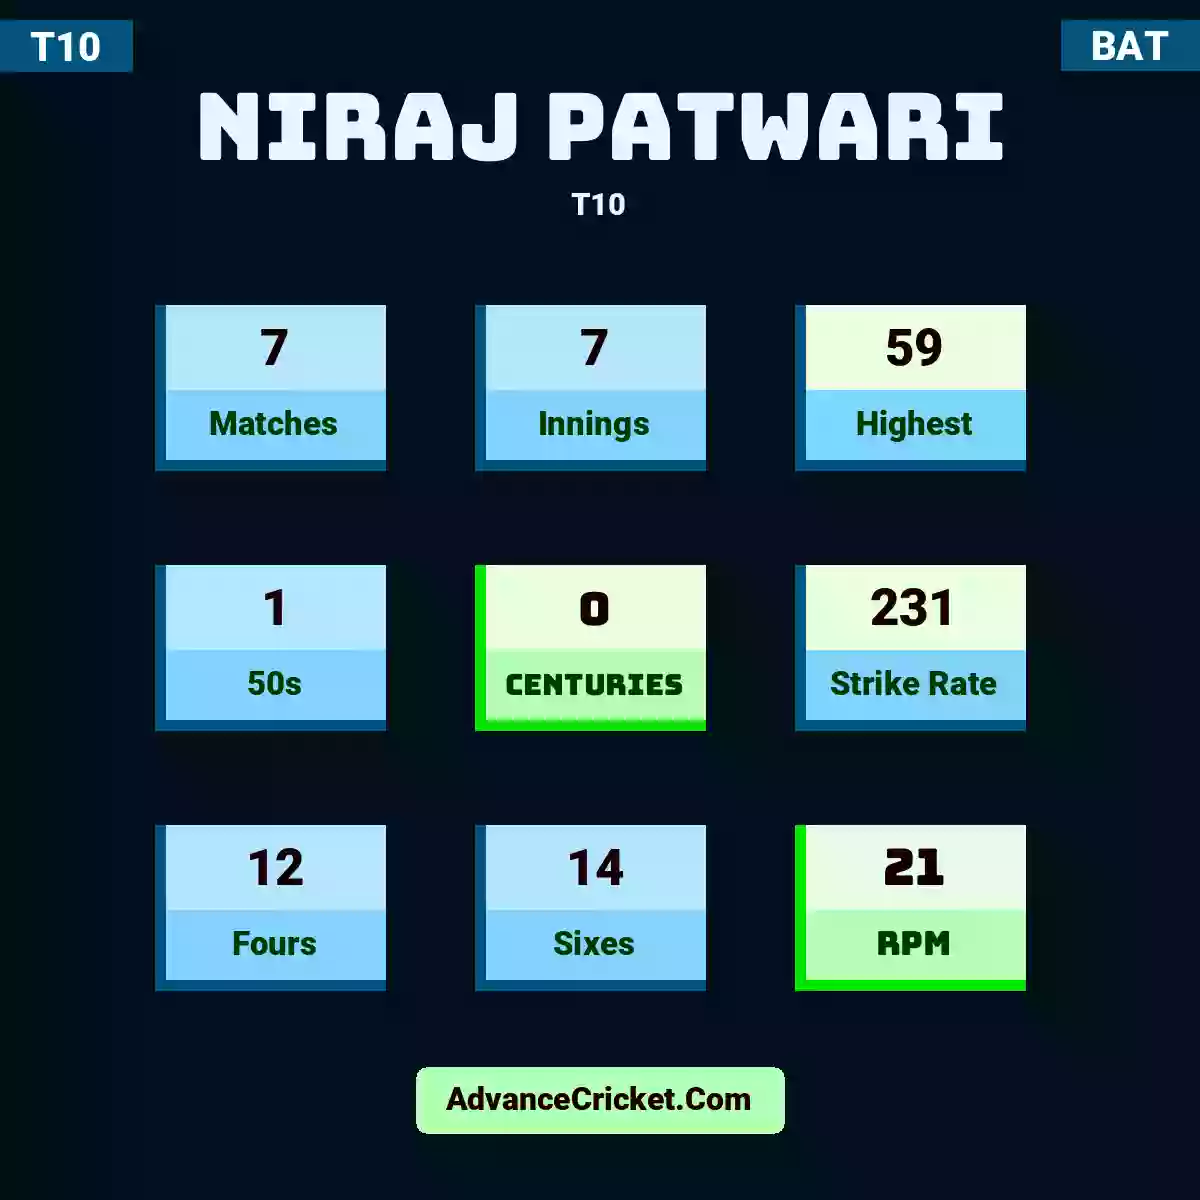 Niraj Patwari T10 , Niraj Patwari played 7 matches, scored 59 runs as highest, 1 half-centuries, and 0 centuries, with a strike rate of 231. N.Patwari hit 12 fours and 14 sixes, with an RPM of 21.